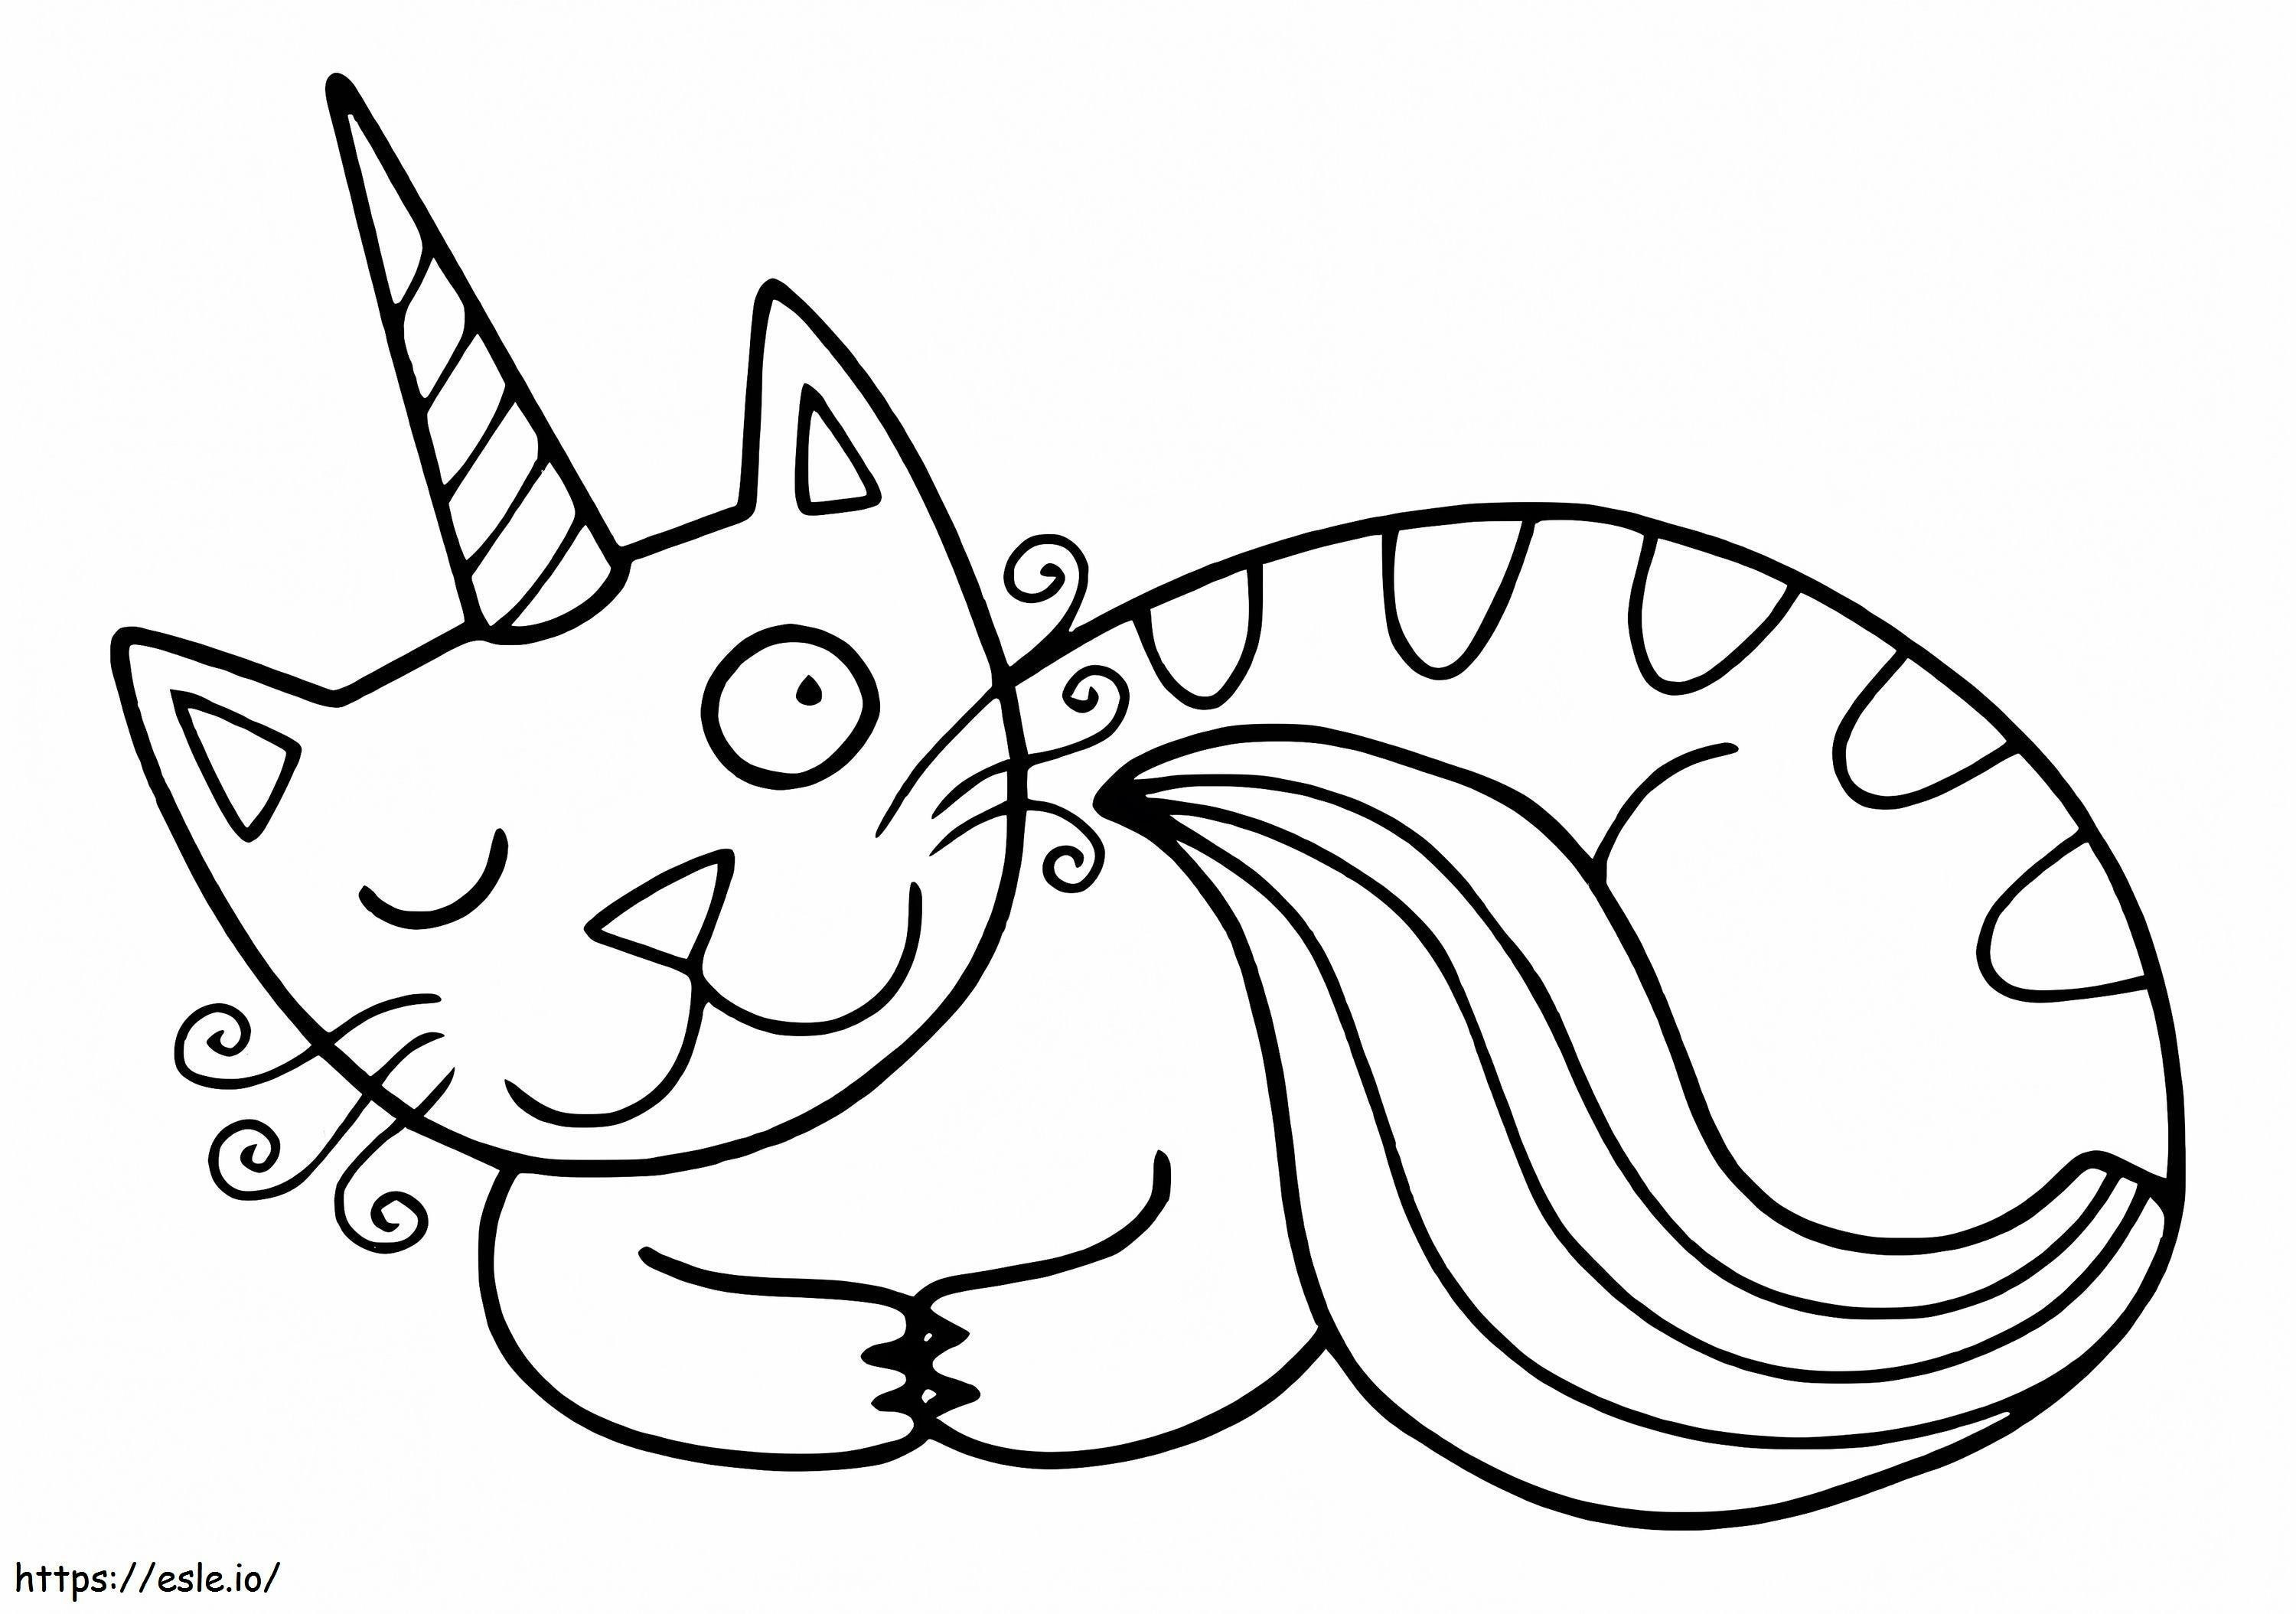 Gato unicórnio engraçado para colorir